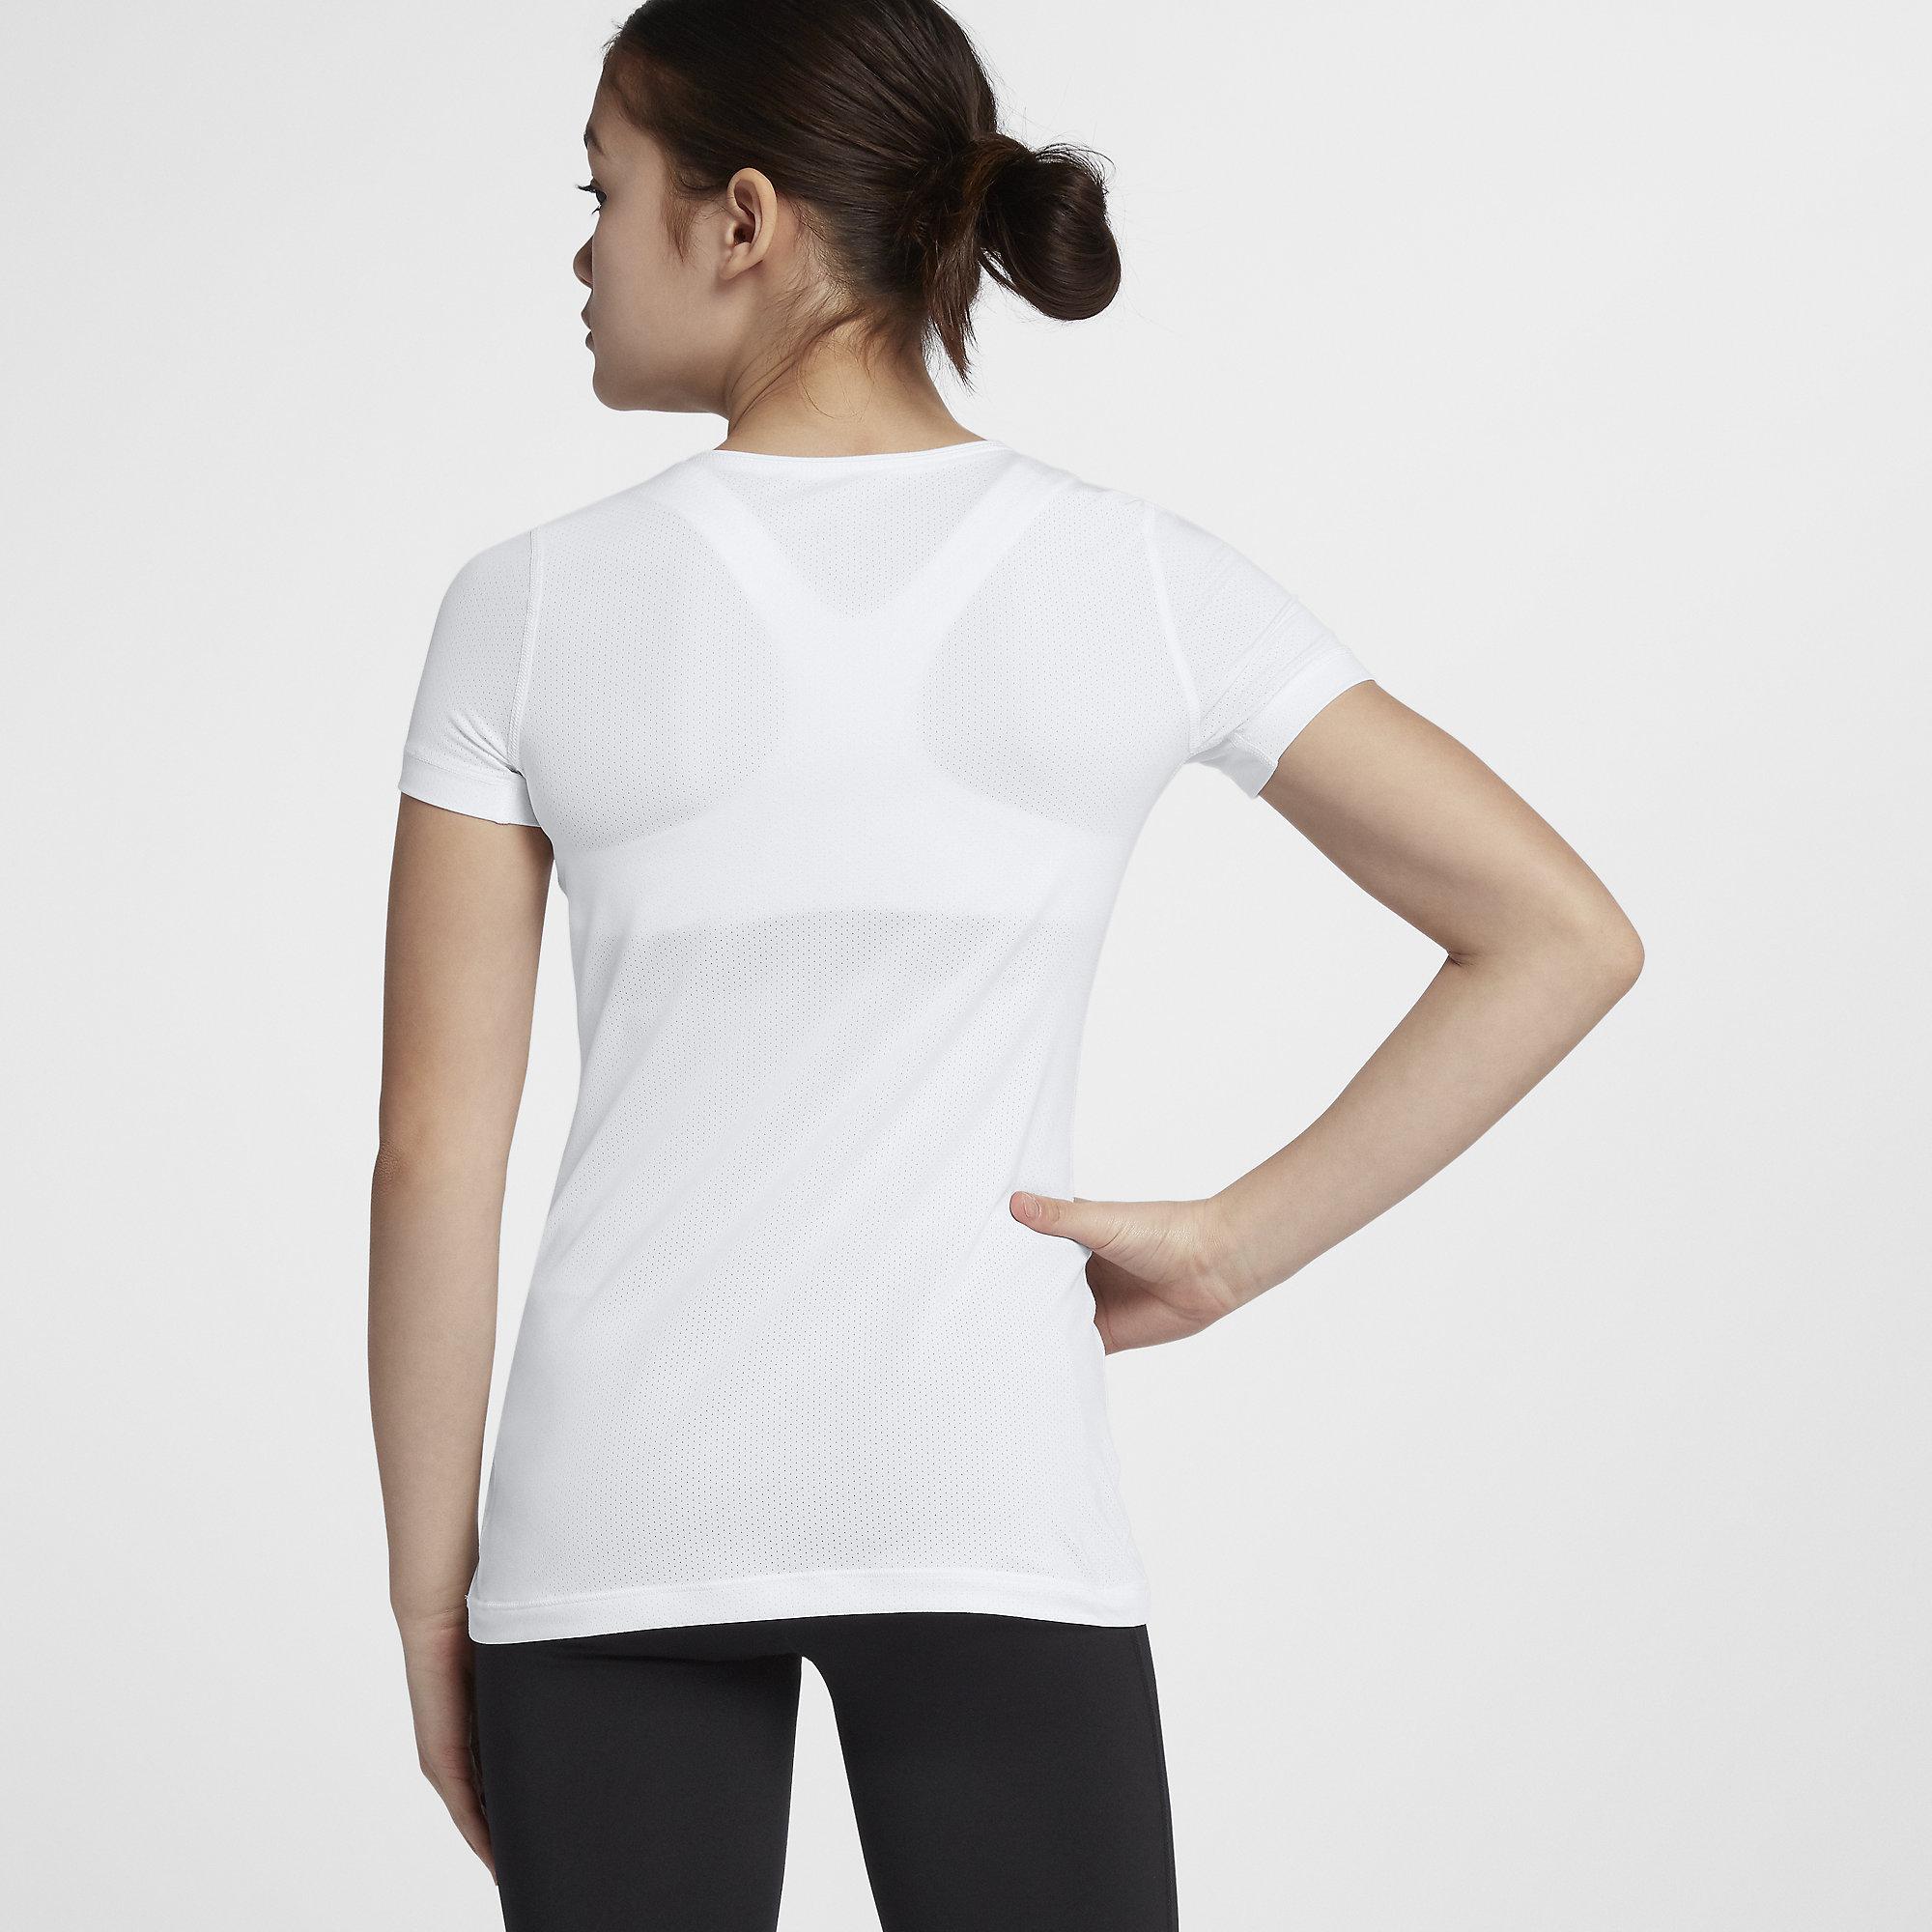 Nike Girls Pro Short Sleeve Top - White/Black - Tennisnuts.com